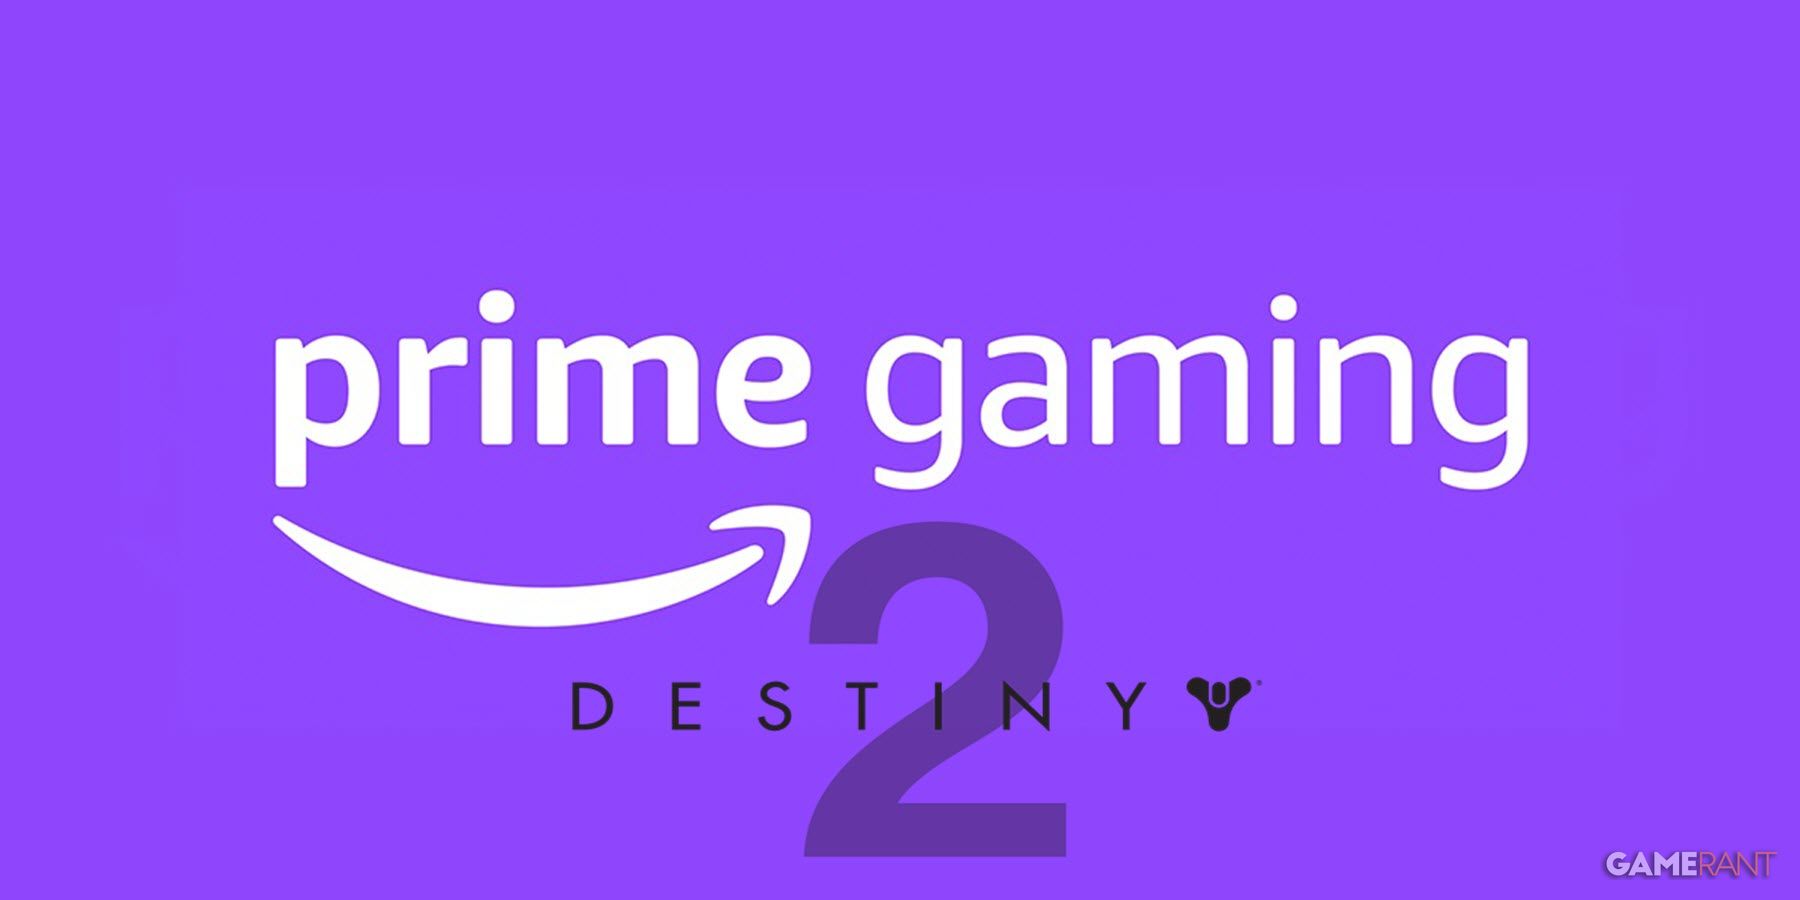 destiny 2 prime gaming rewards feb